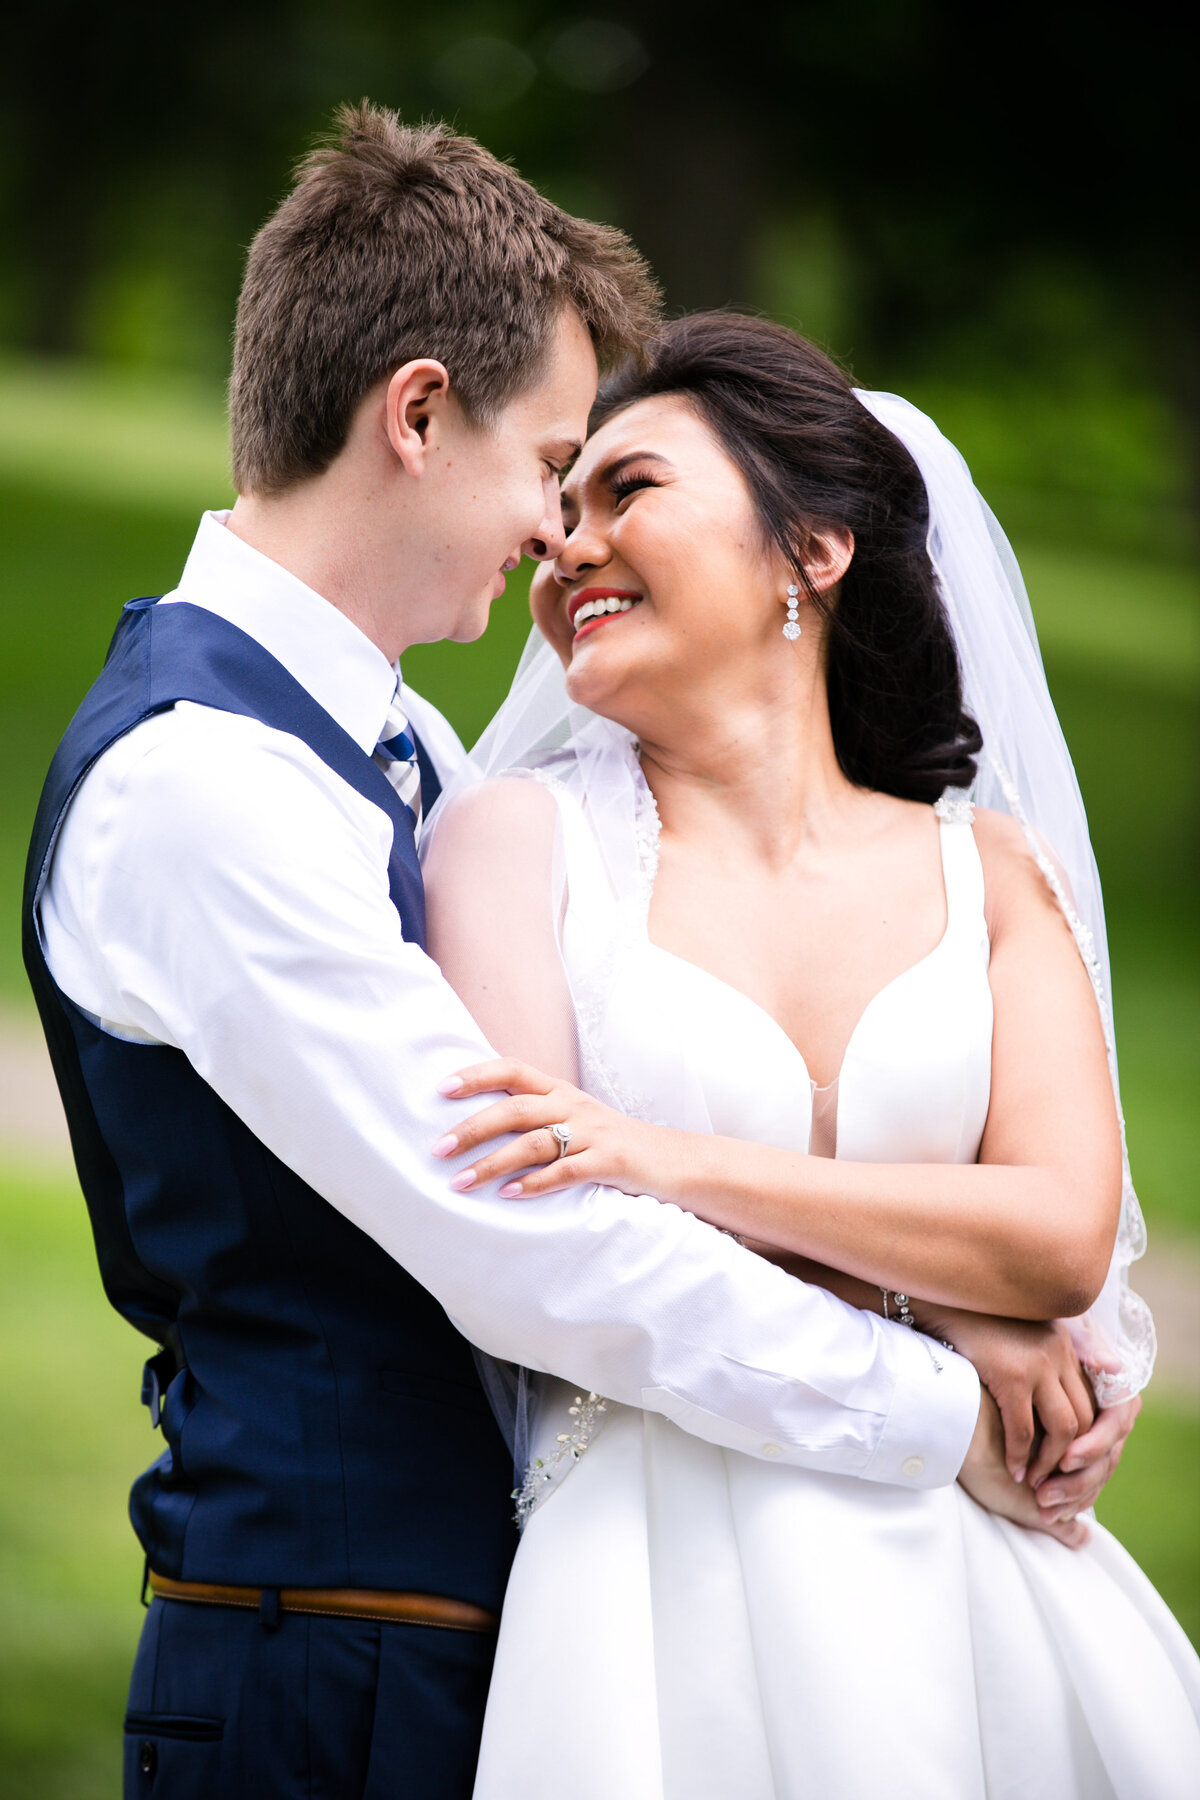 njeri-bishota-lauren-ashley-bride-groom-love-embrace-white-dress-beautiful-smile